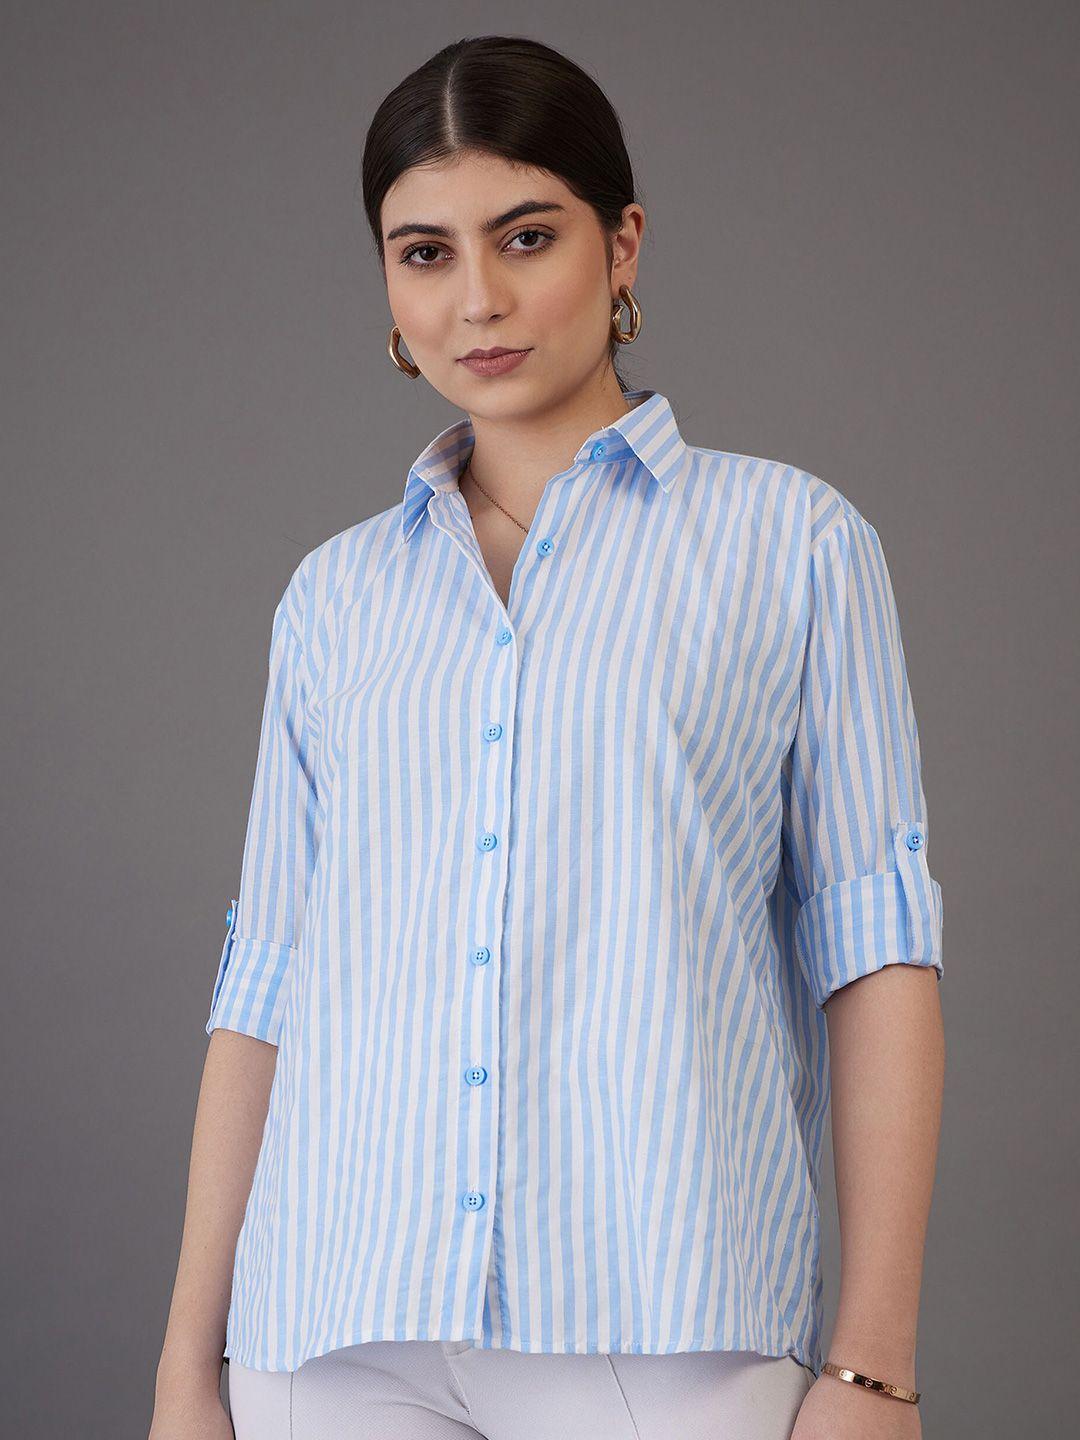 sassafras worklyf vertical striped roll-up sleeves casual shirt